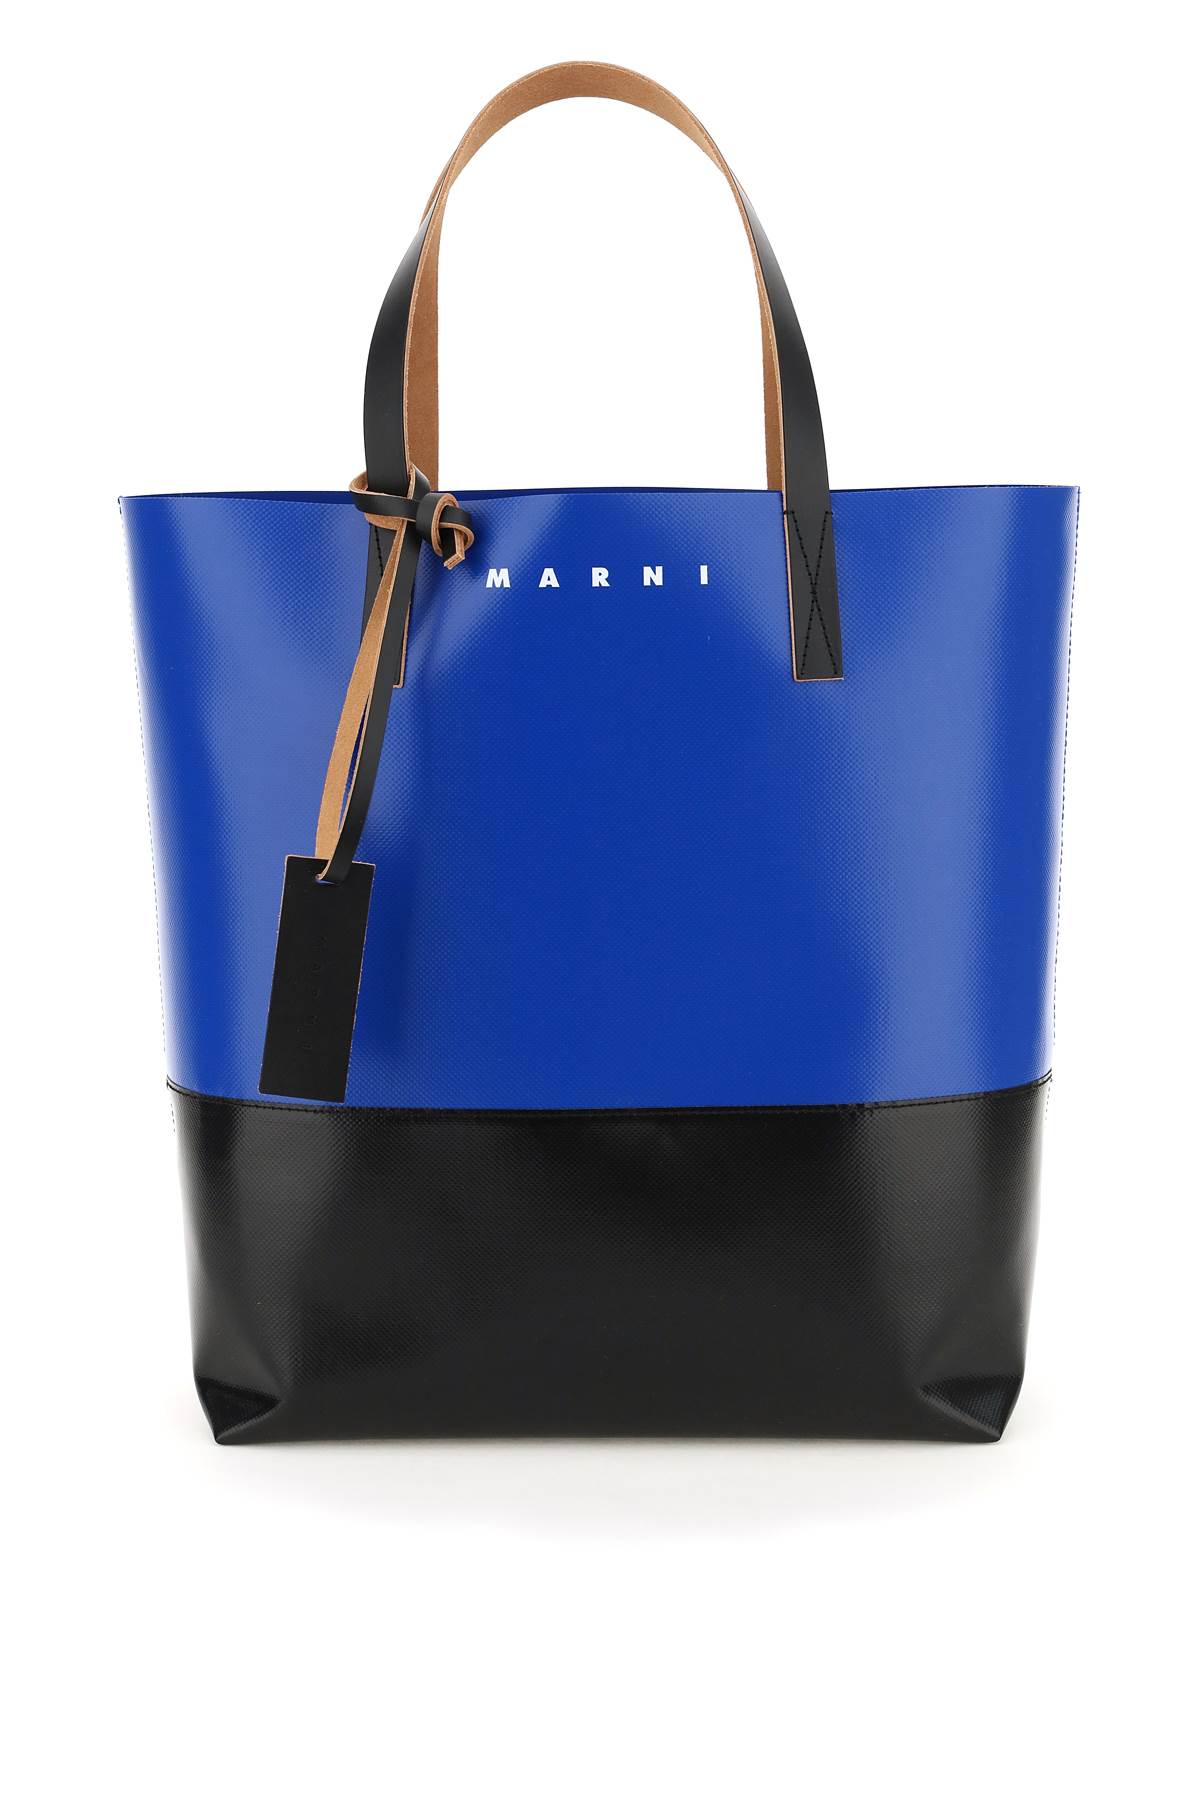 Marni Pvc Tribeca Shopping Bag